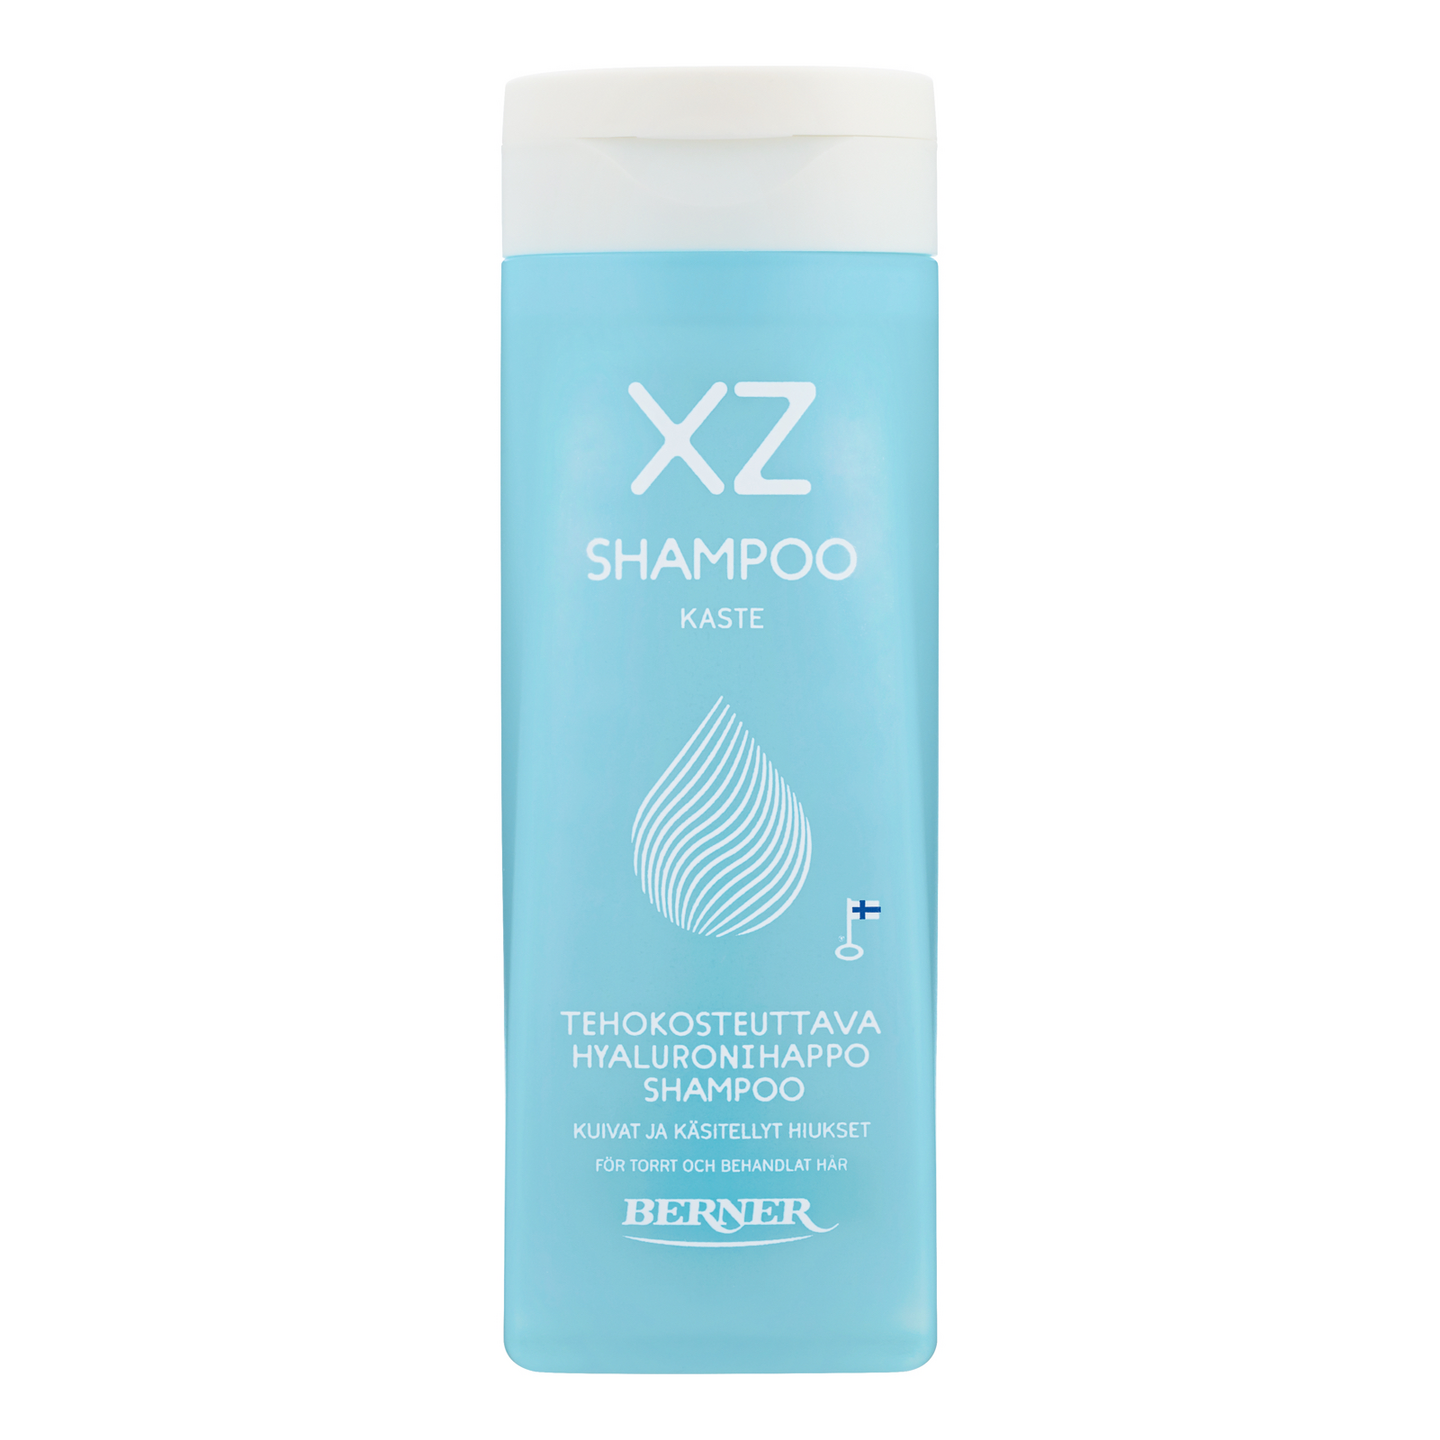 XZ shampoo 250ml Kaste tehokosteuttava hyaluronihappo